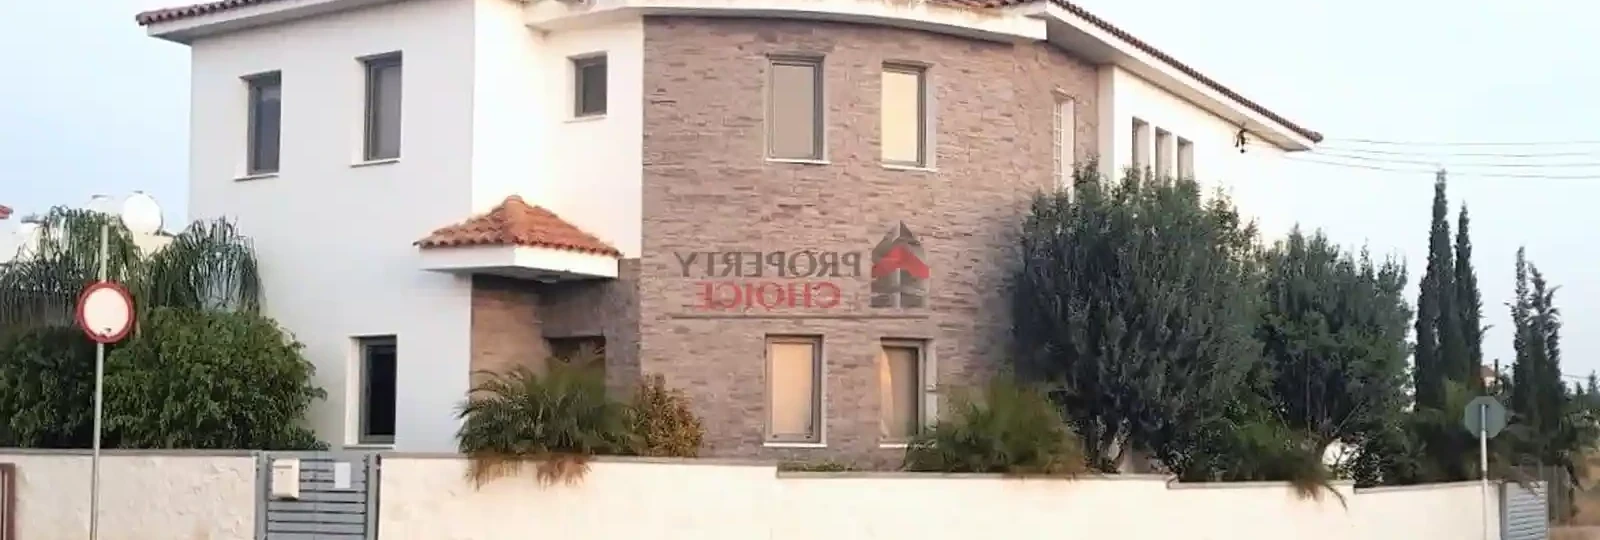 3-bedroom villa fоr sаle €330.000, image 1